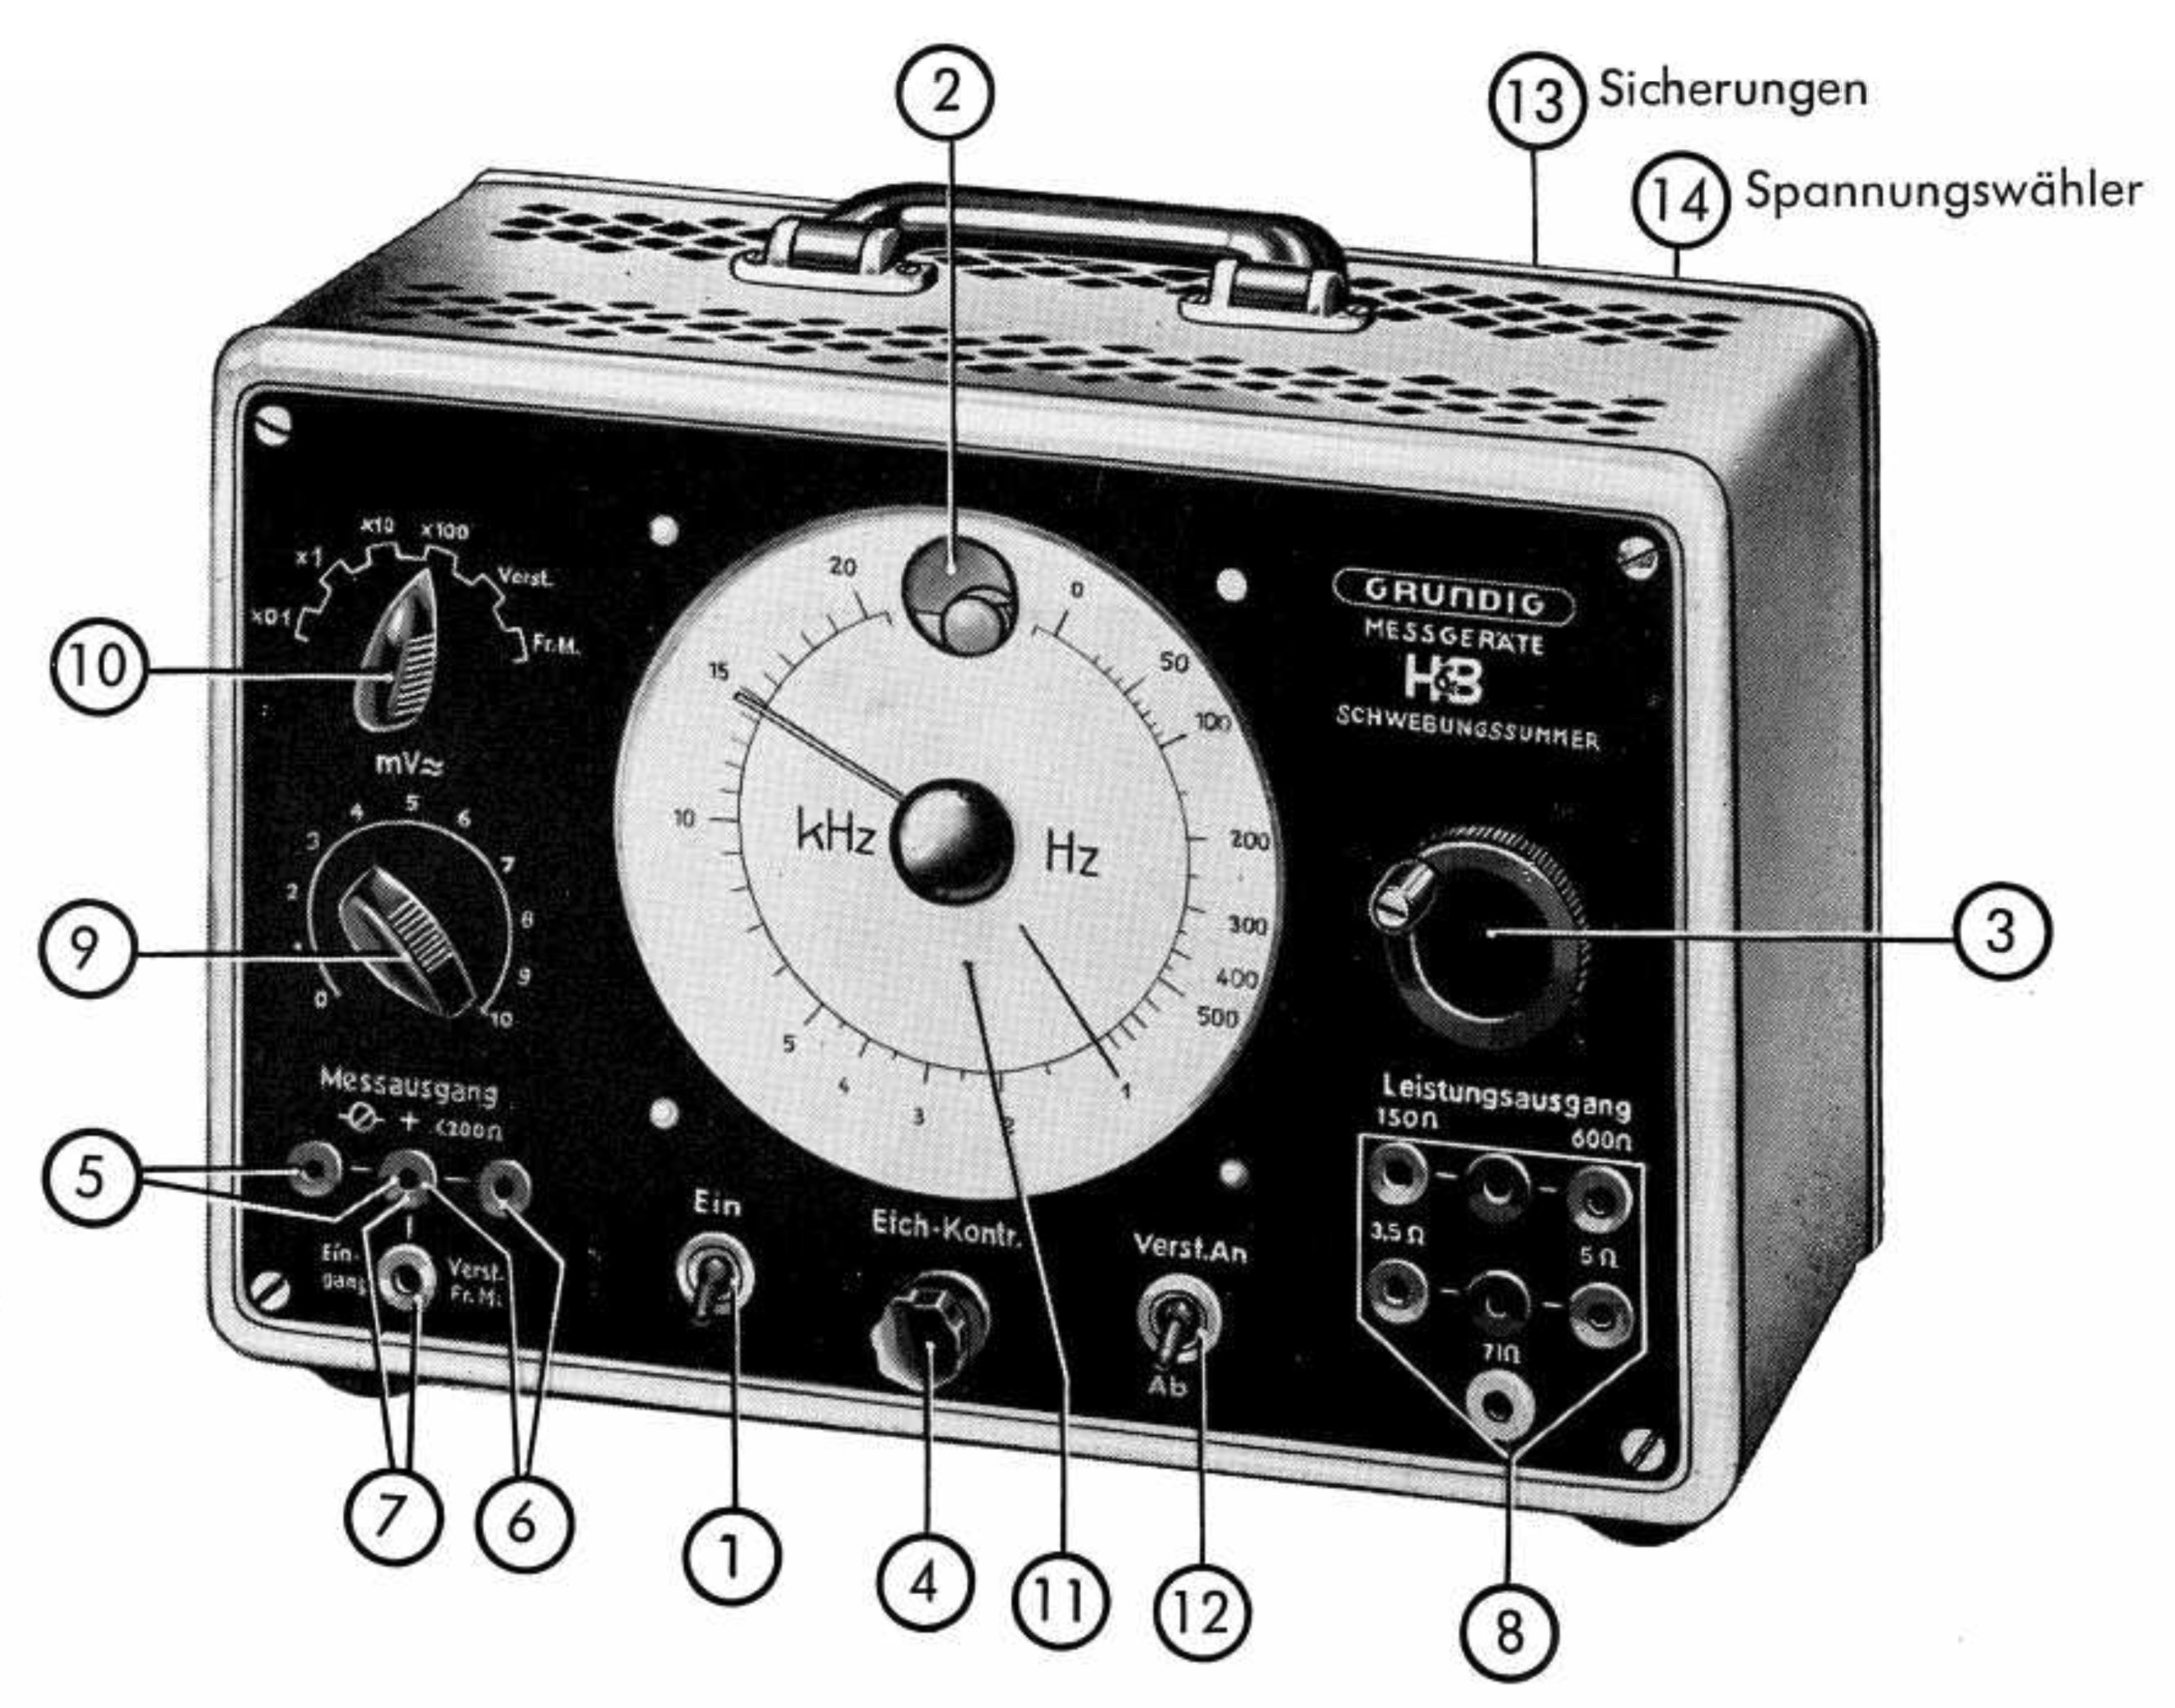 Model 295A beat frequency oscillator.